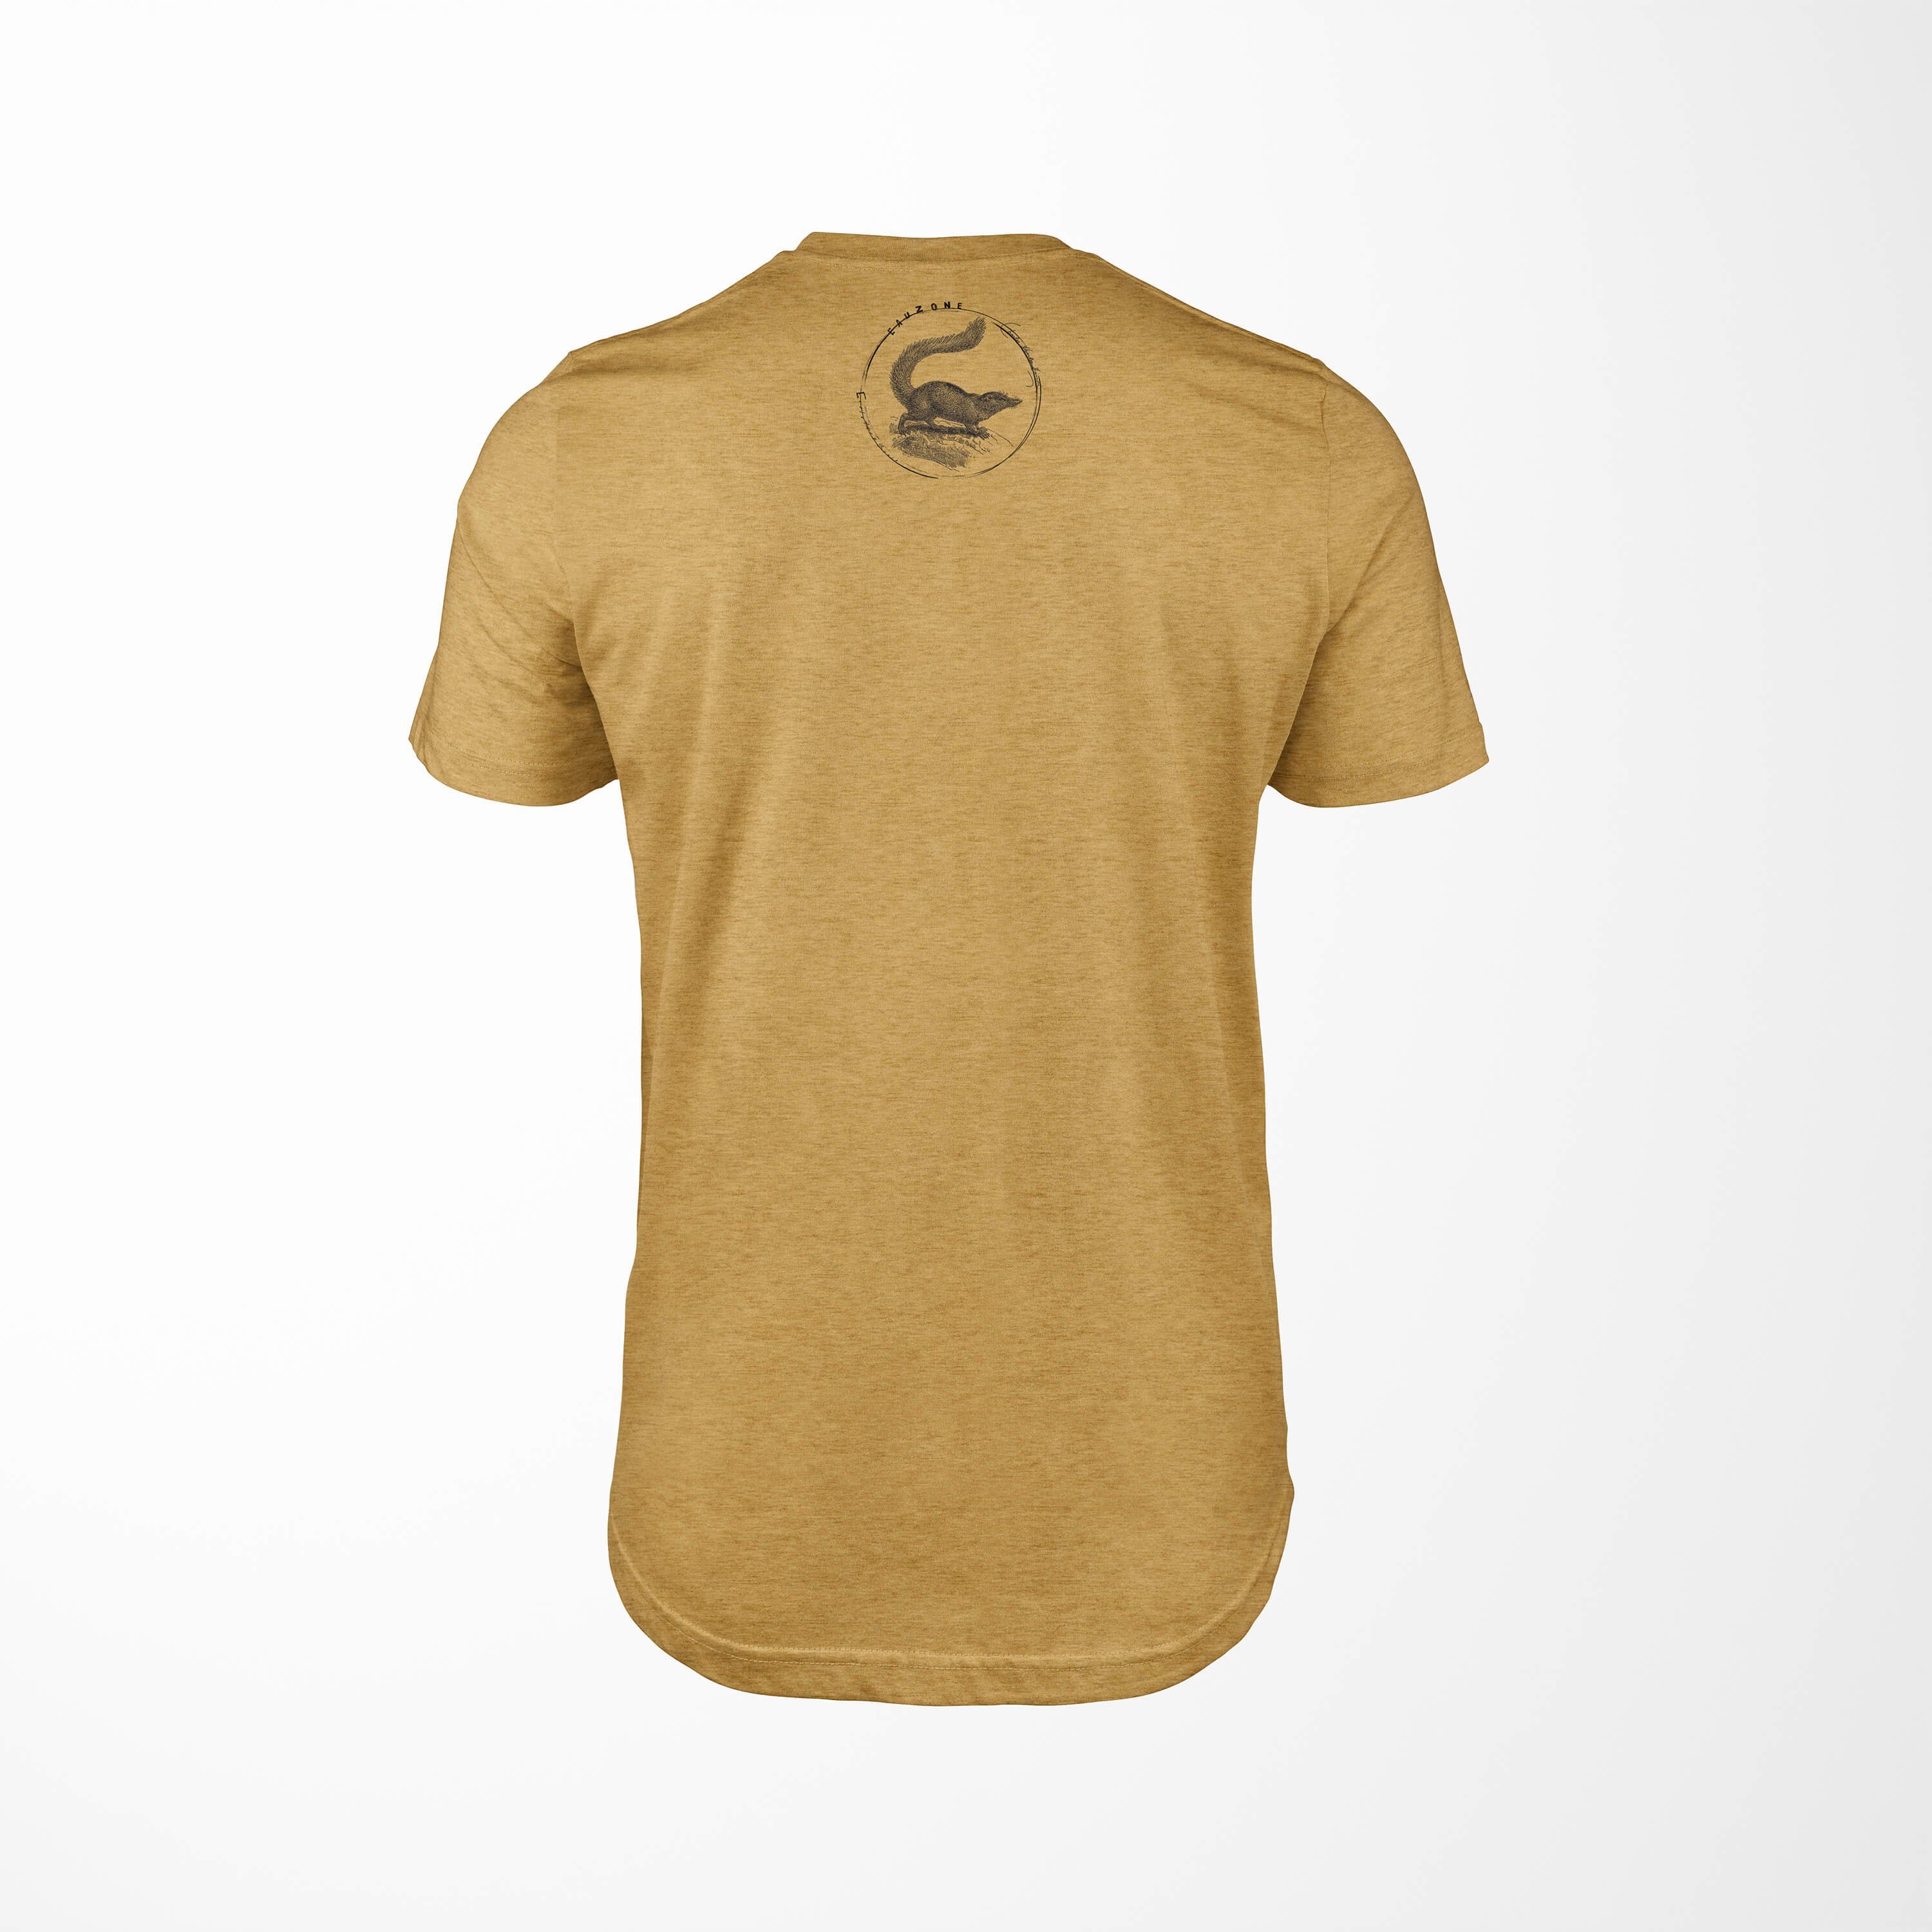 Art T-Shirt Antique T-Shirt Herren Gold Spitzhörnchen Evolution Sinus